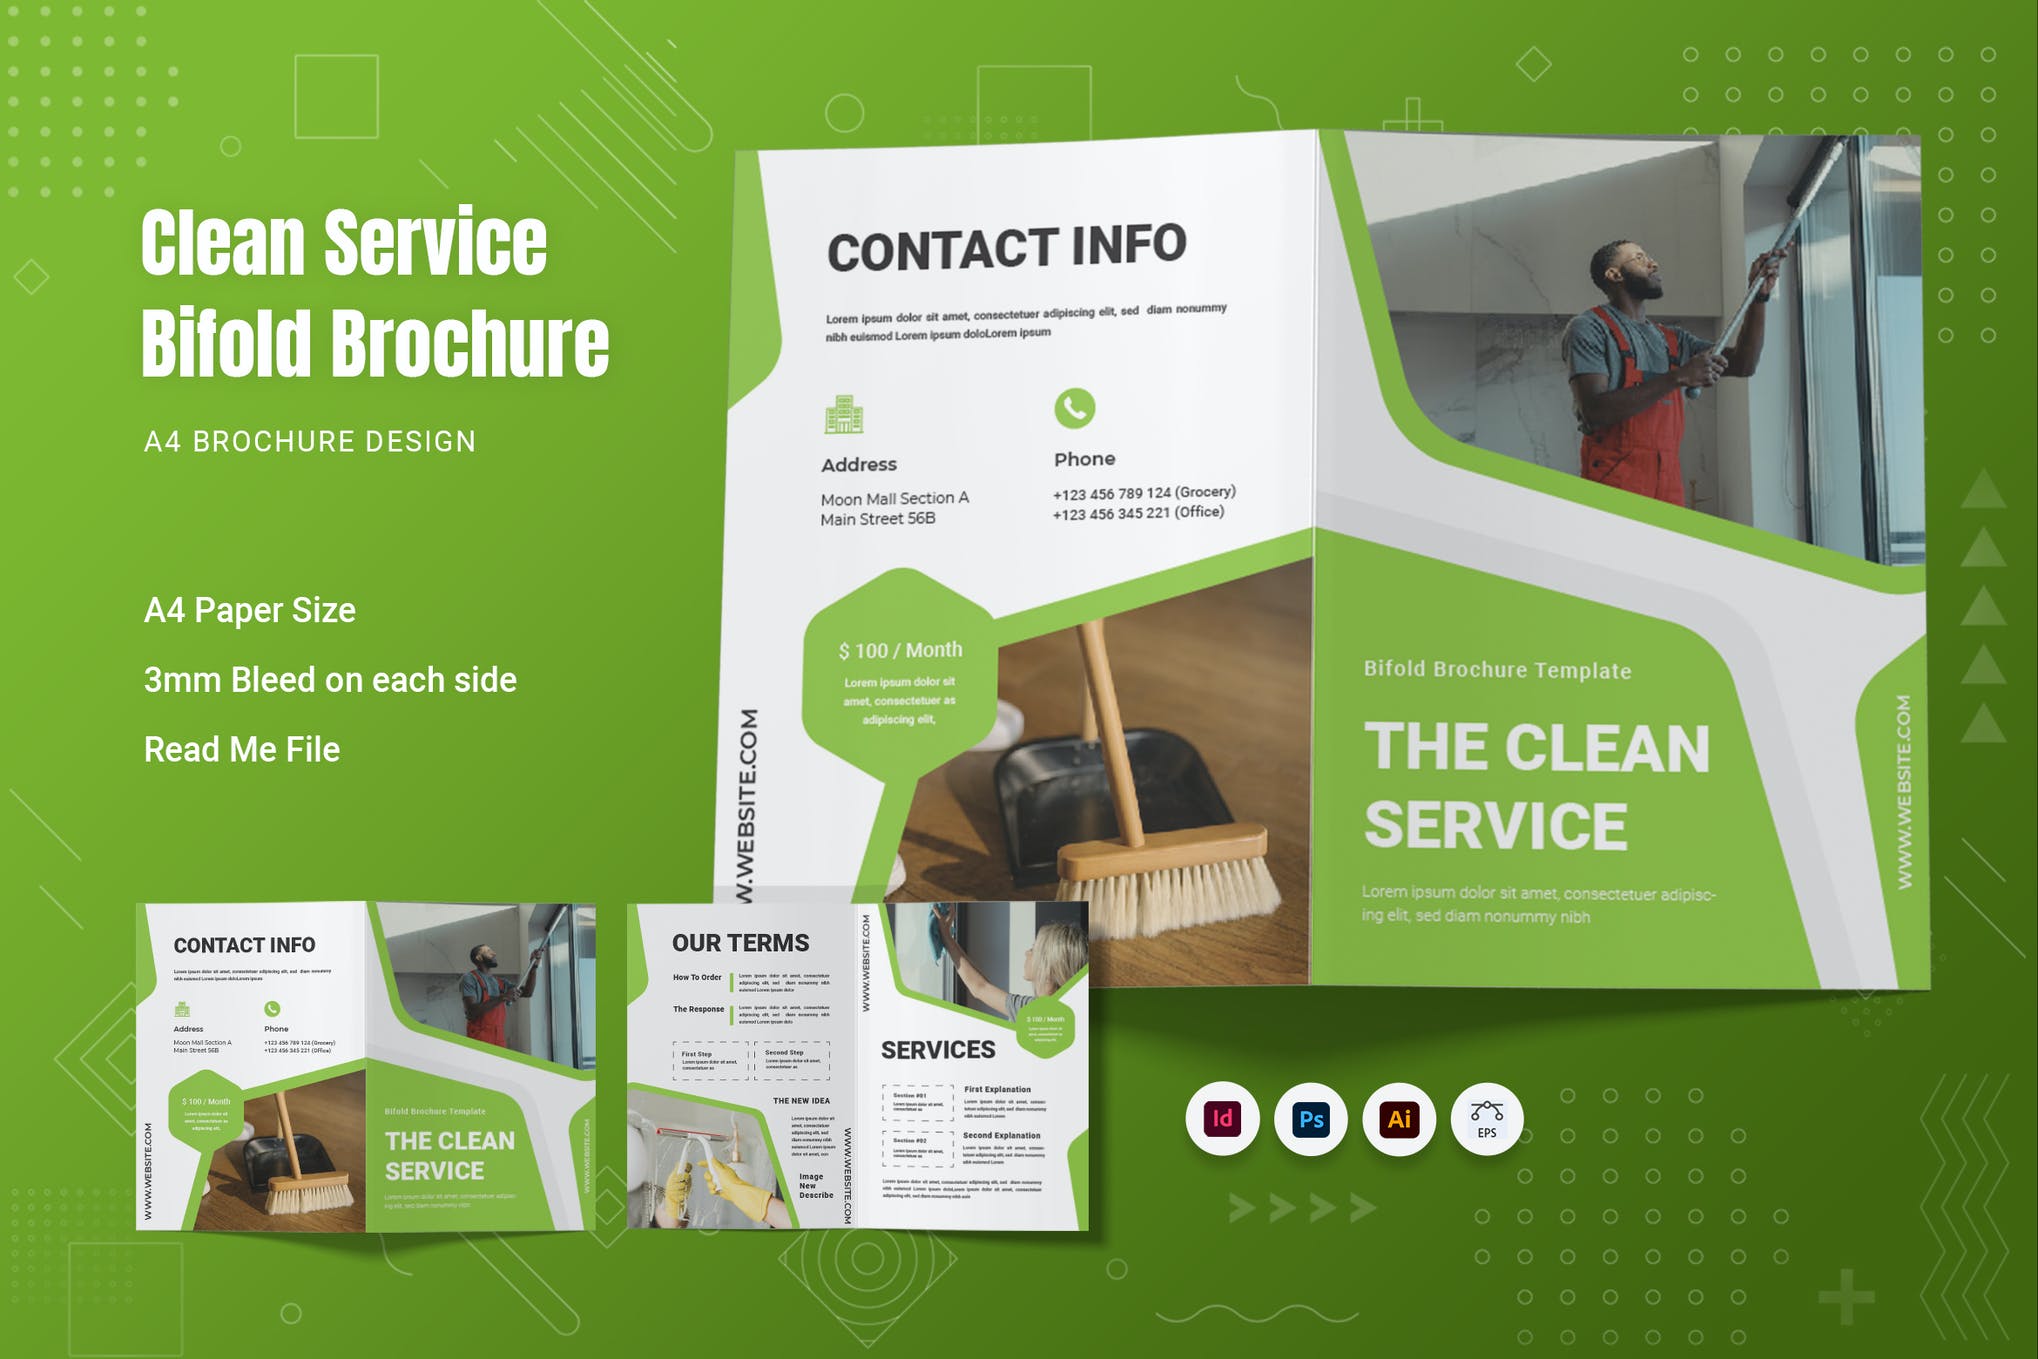 The Clean Service Bifold Brochure